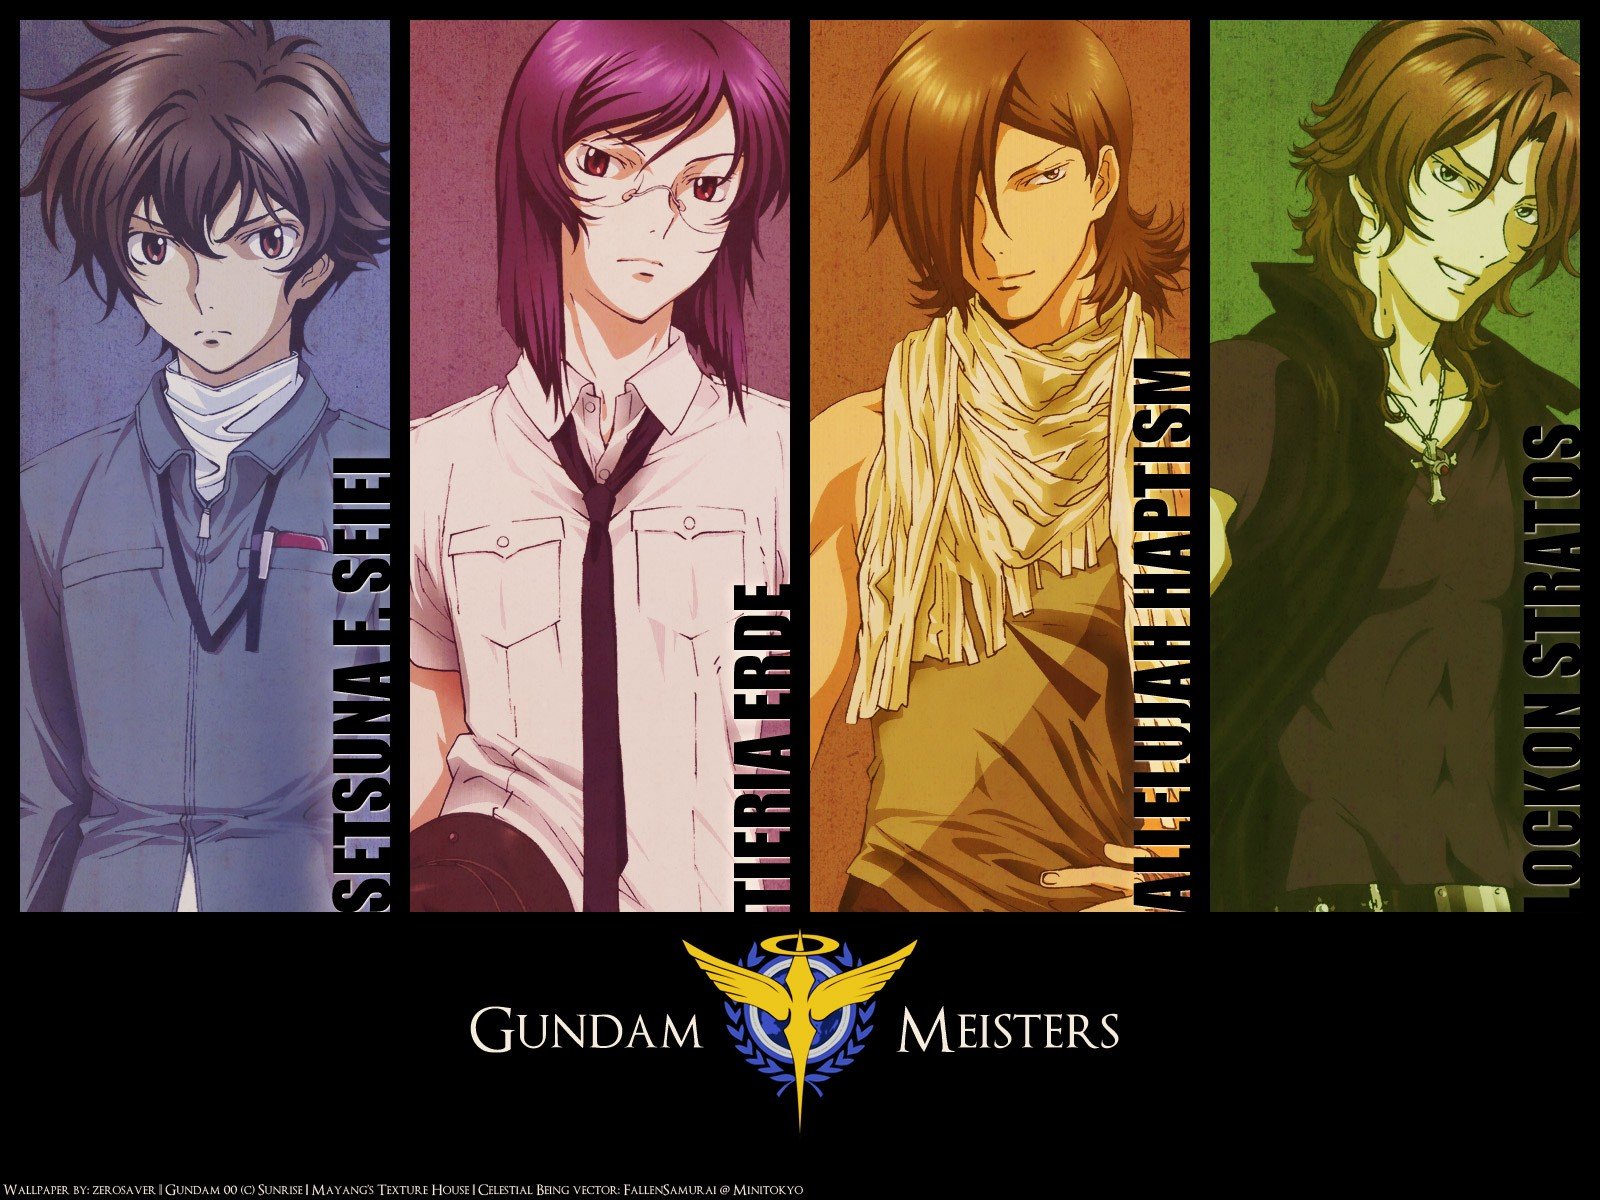 Mobile Suit Setsuna F Seiei Gundam - HD Wallpaper 